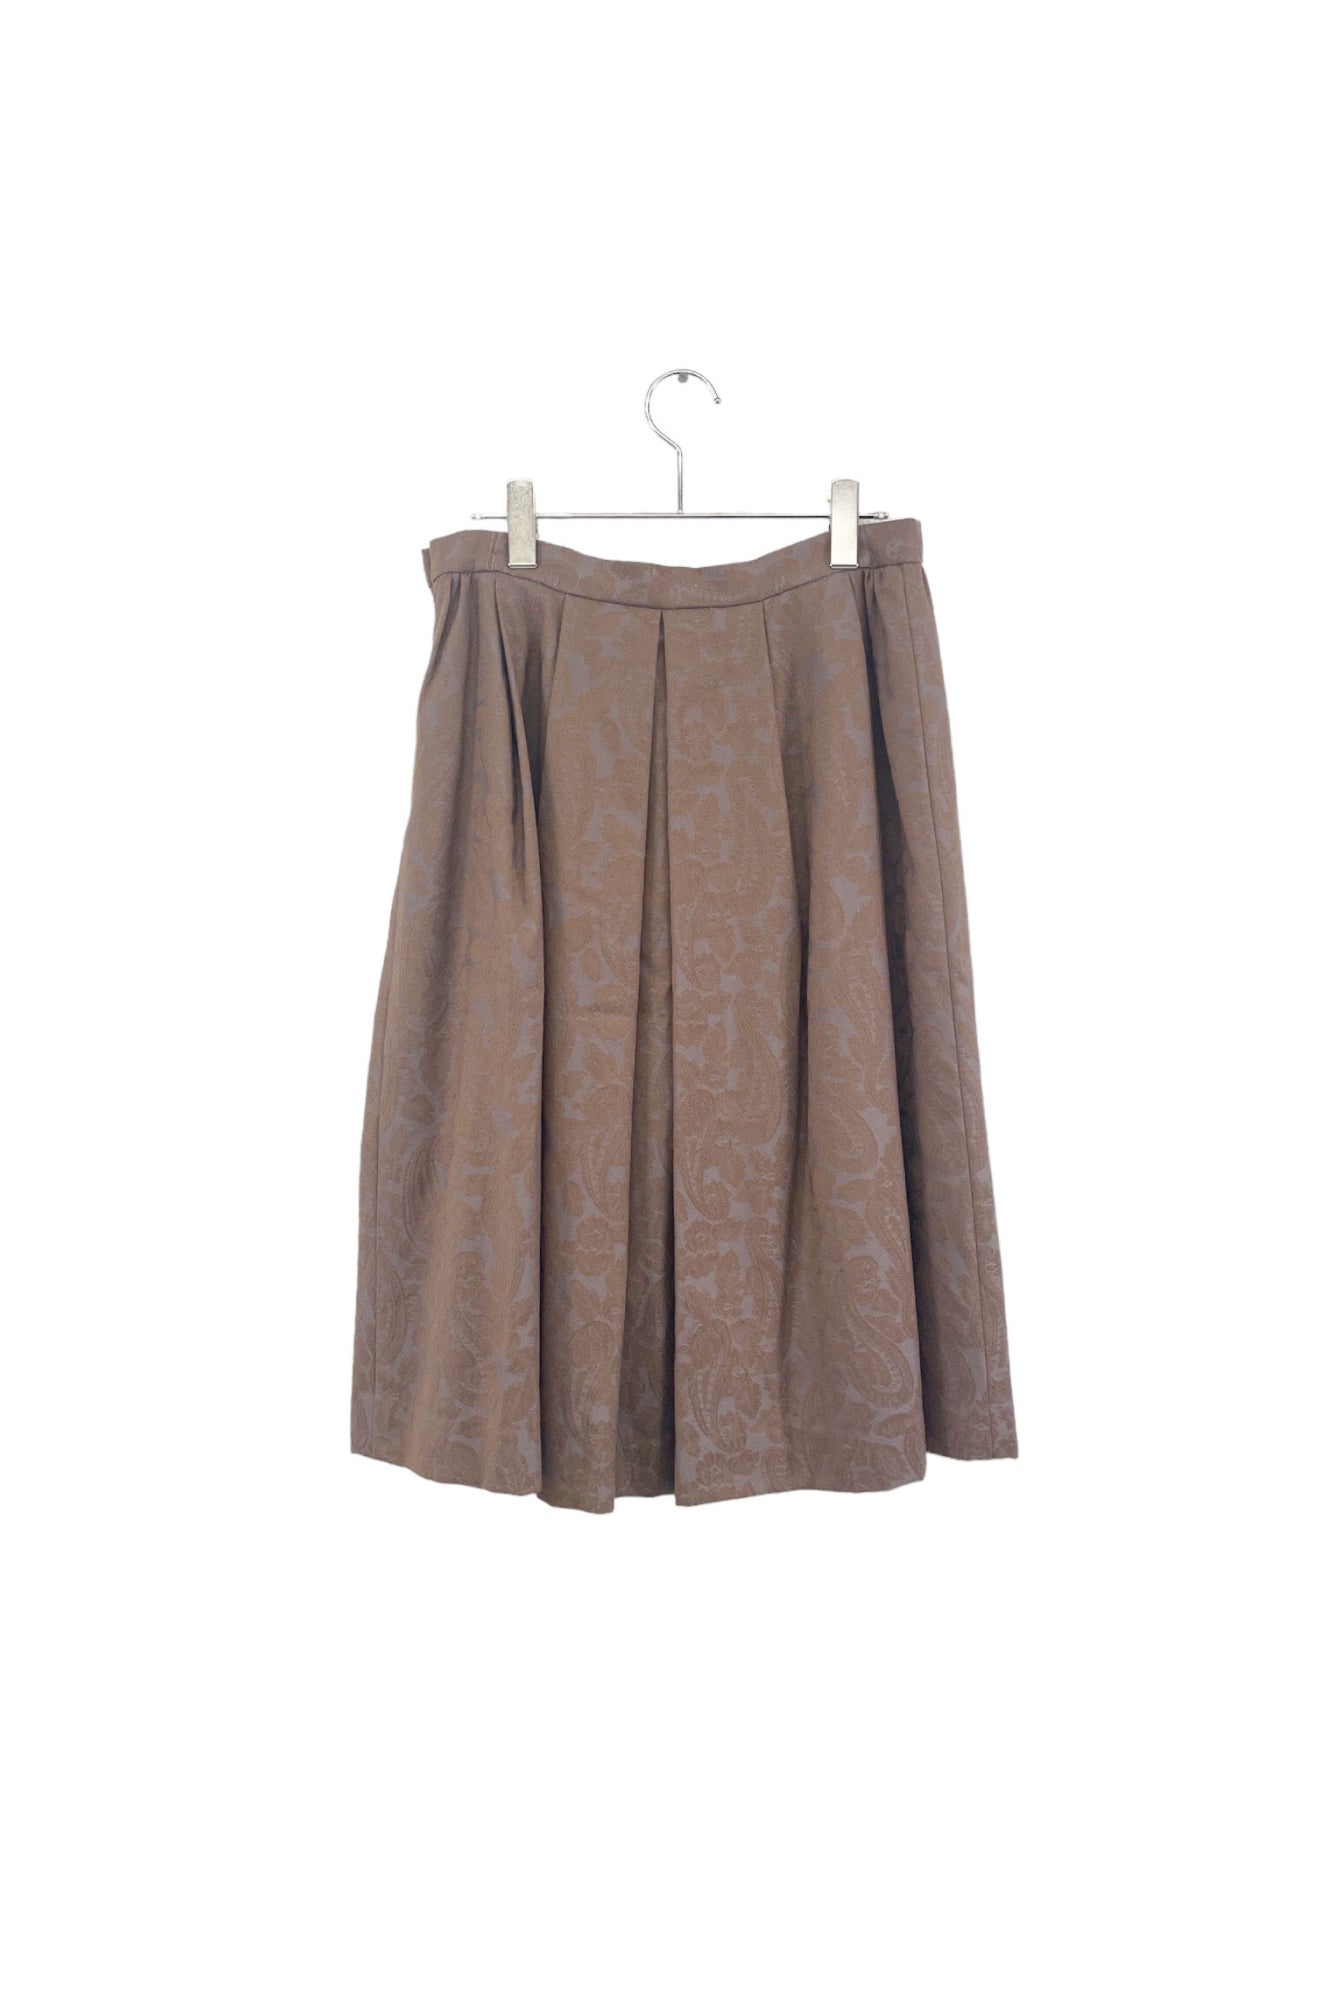 90's BURBERRYS brown skirt